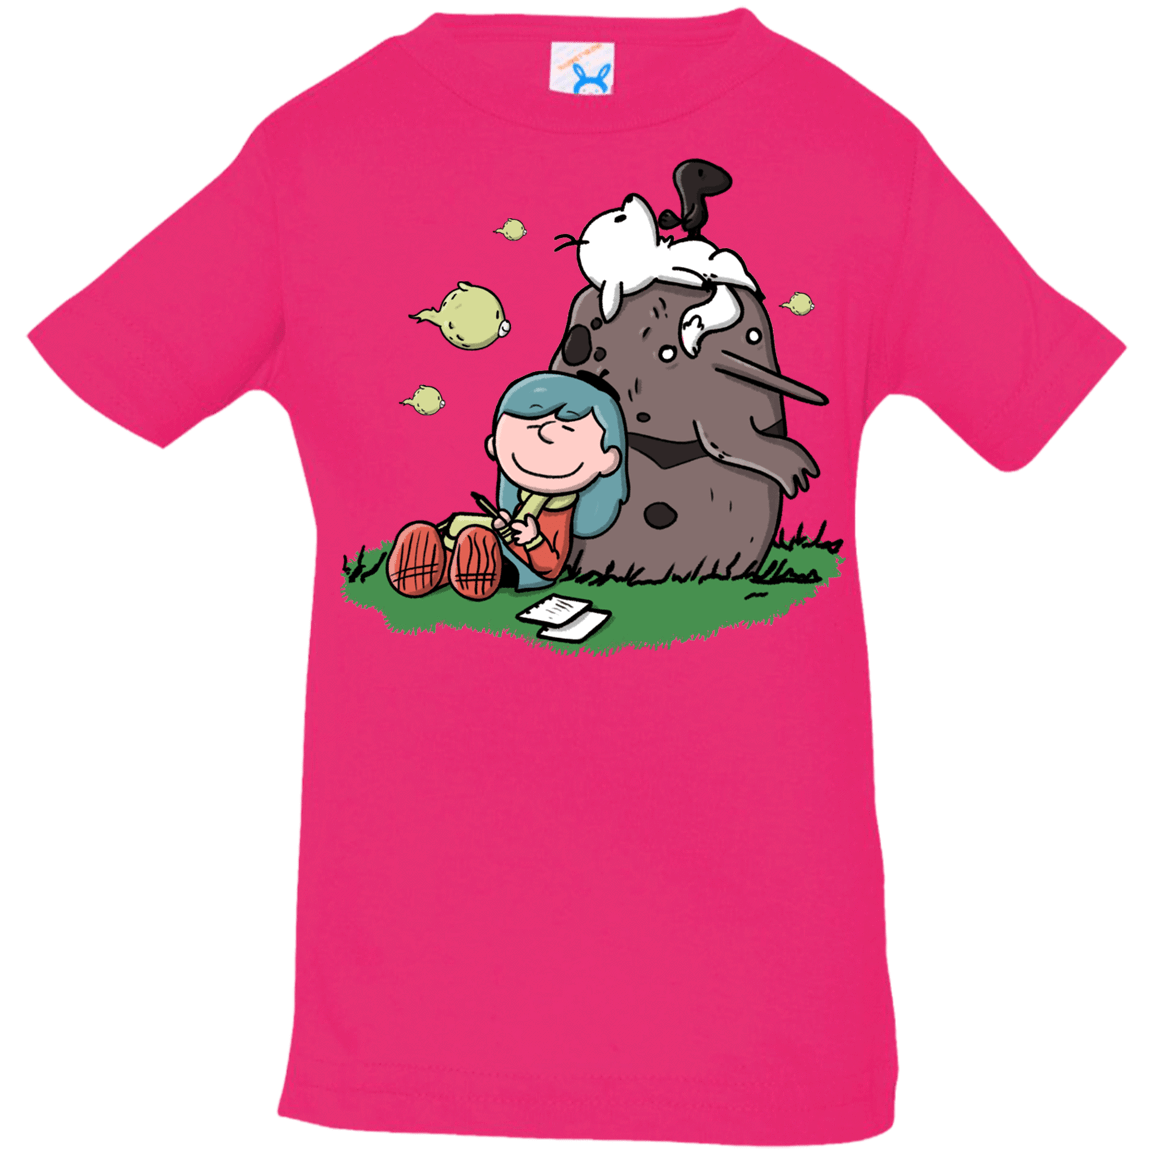 T-Shirts Hot Pink / 6 Months Hilda Brown Infant Premium T-Shirt